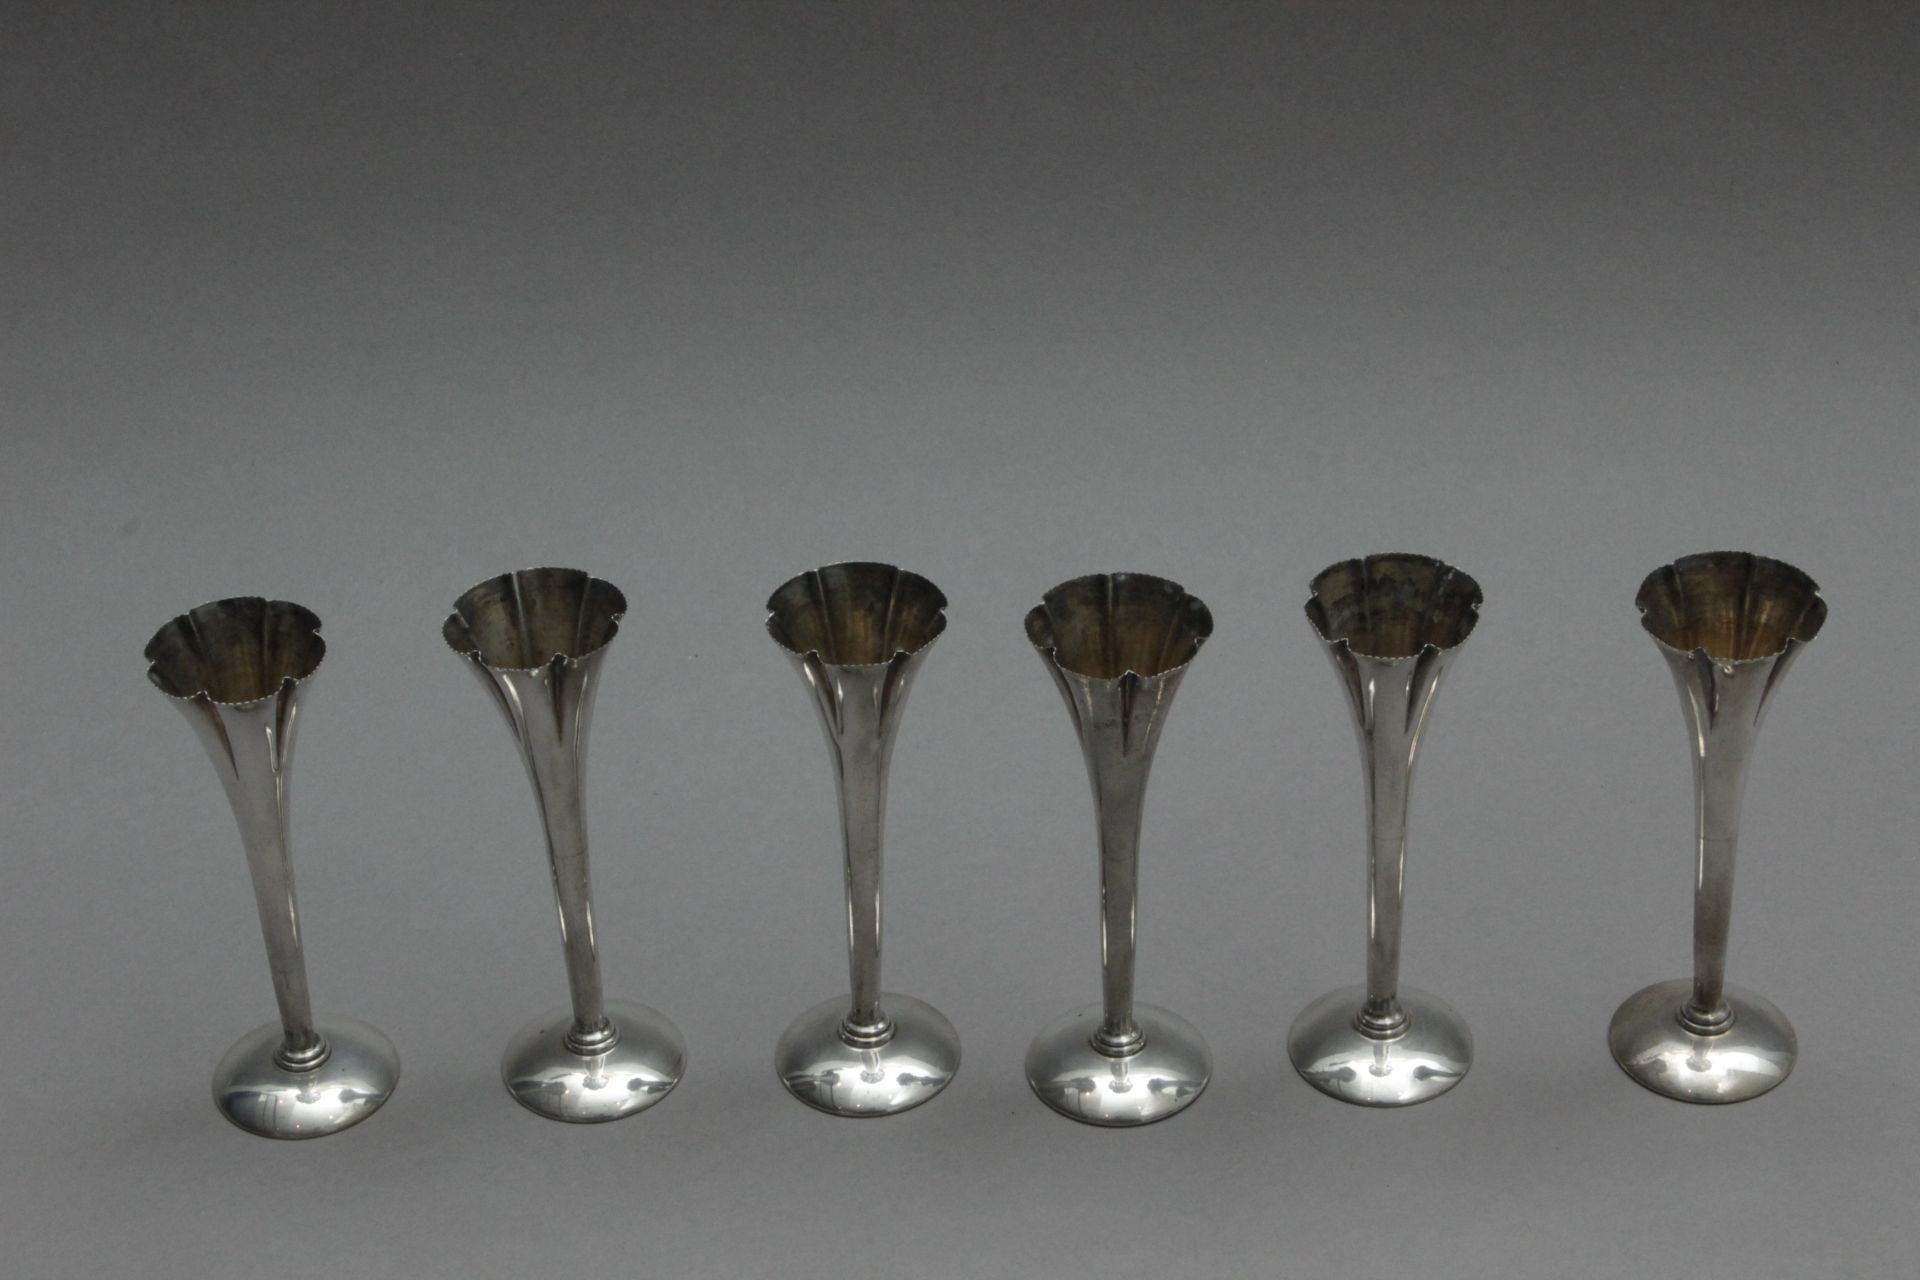 Masriera y Carreras. Set of six silver candlesticks